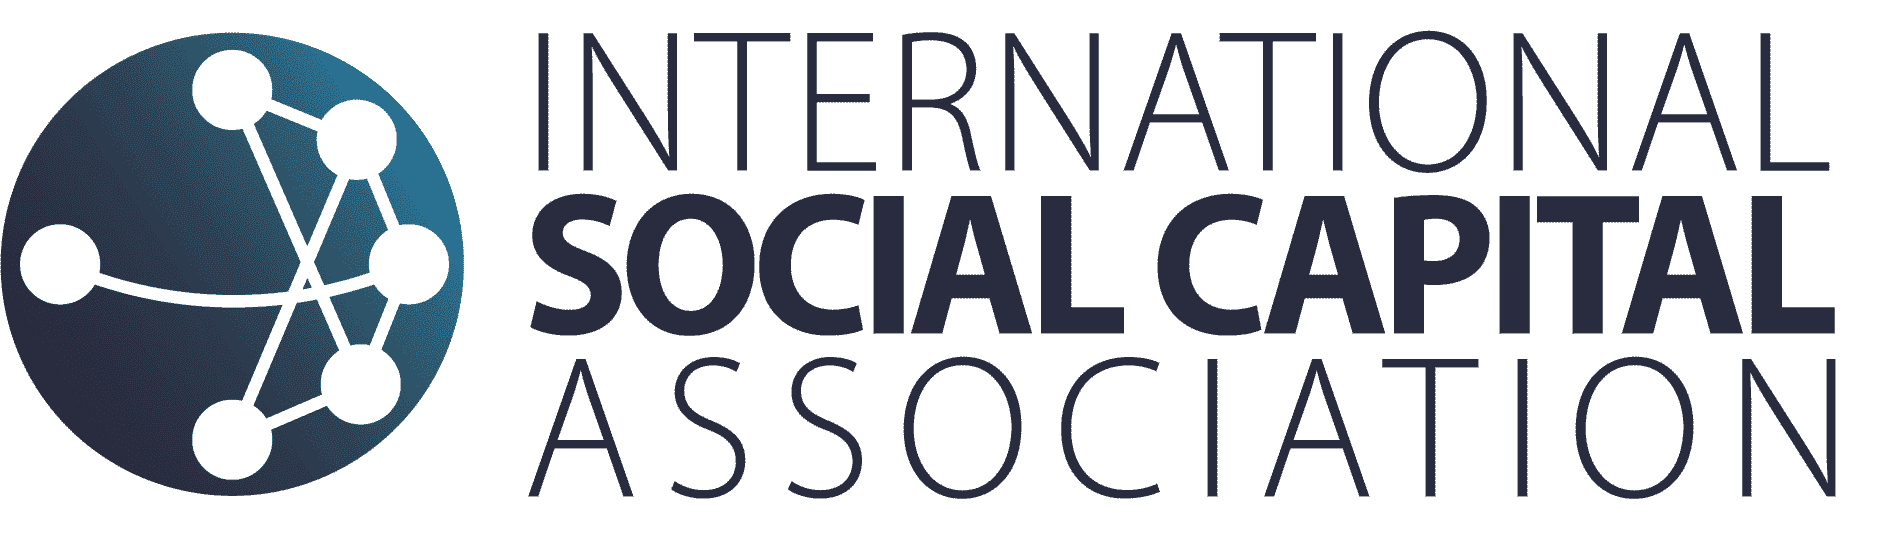 International Social Capital Association (ISCA)